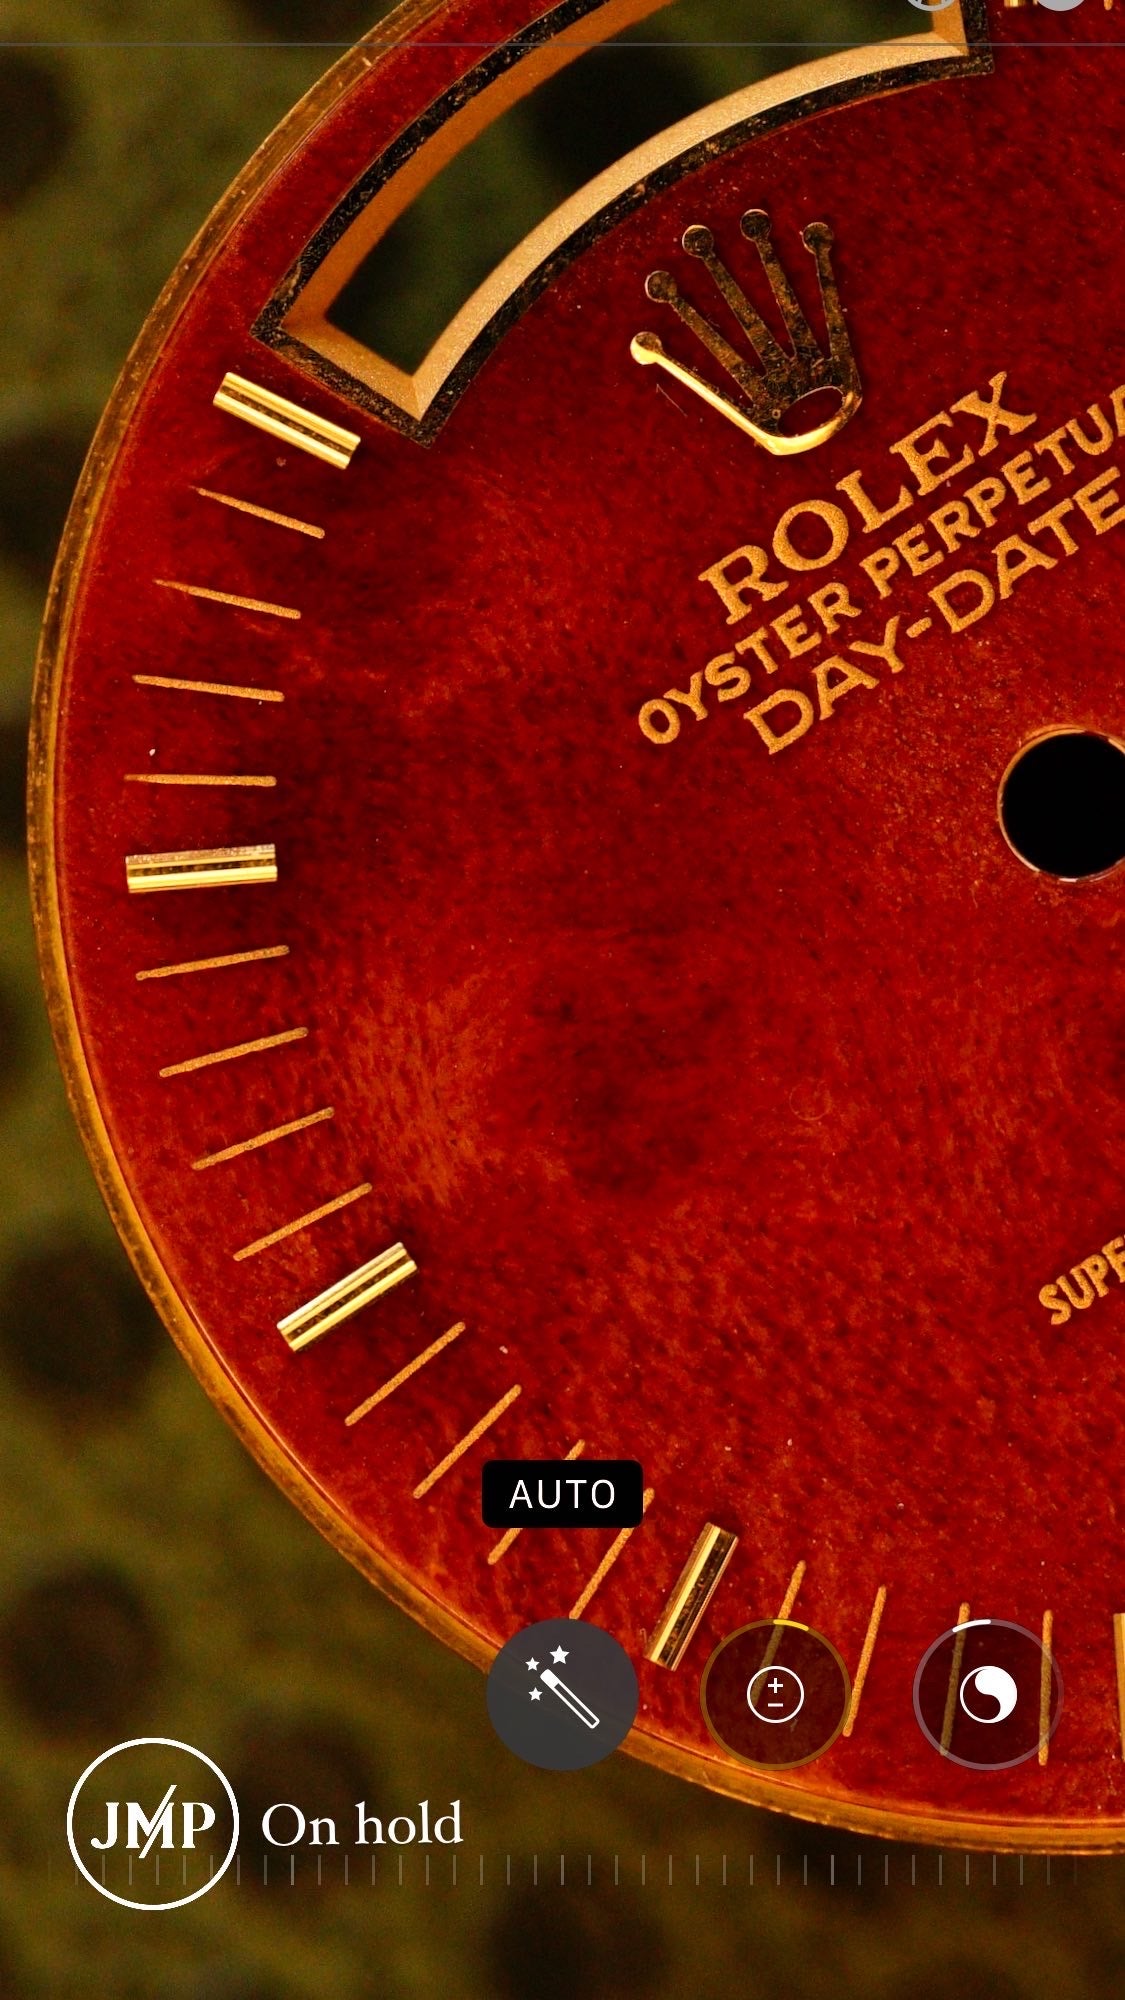 Rolex "wood dial" Holz Zifferblatt für OP Day-Date 36 mm 18038 | 18238